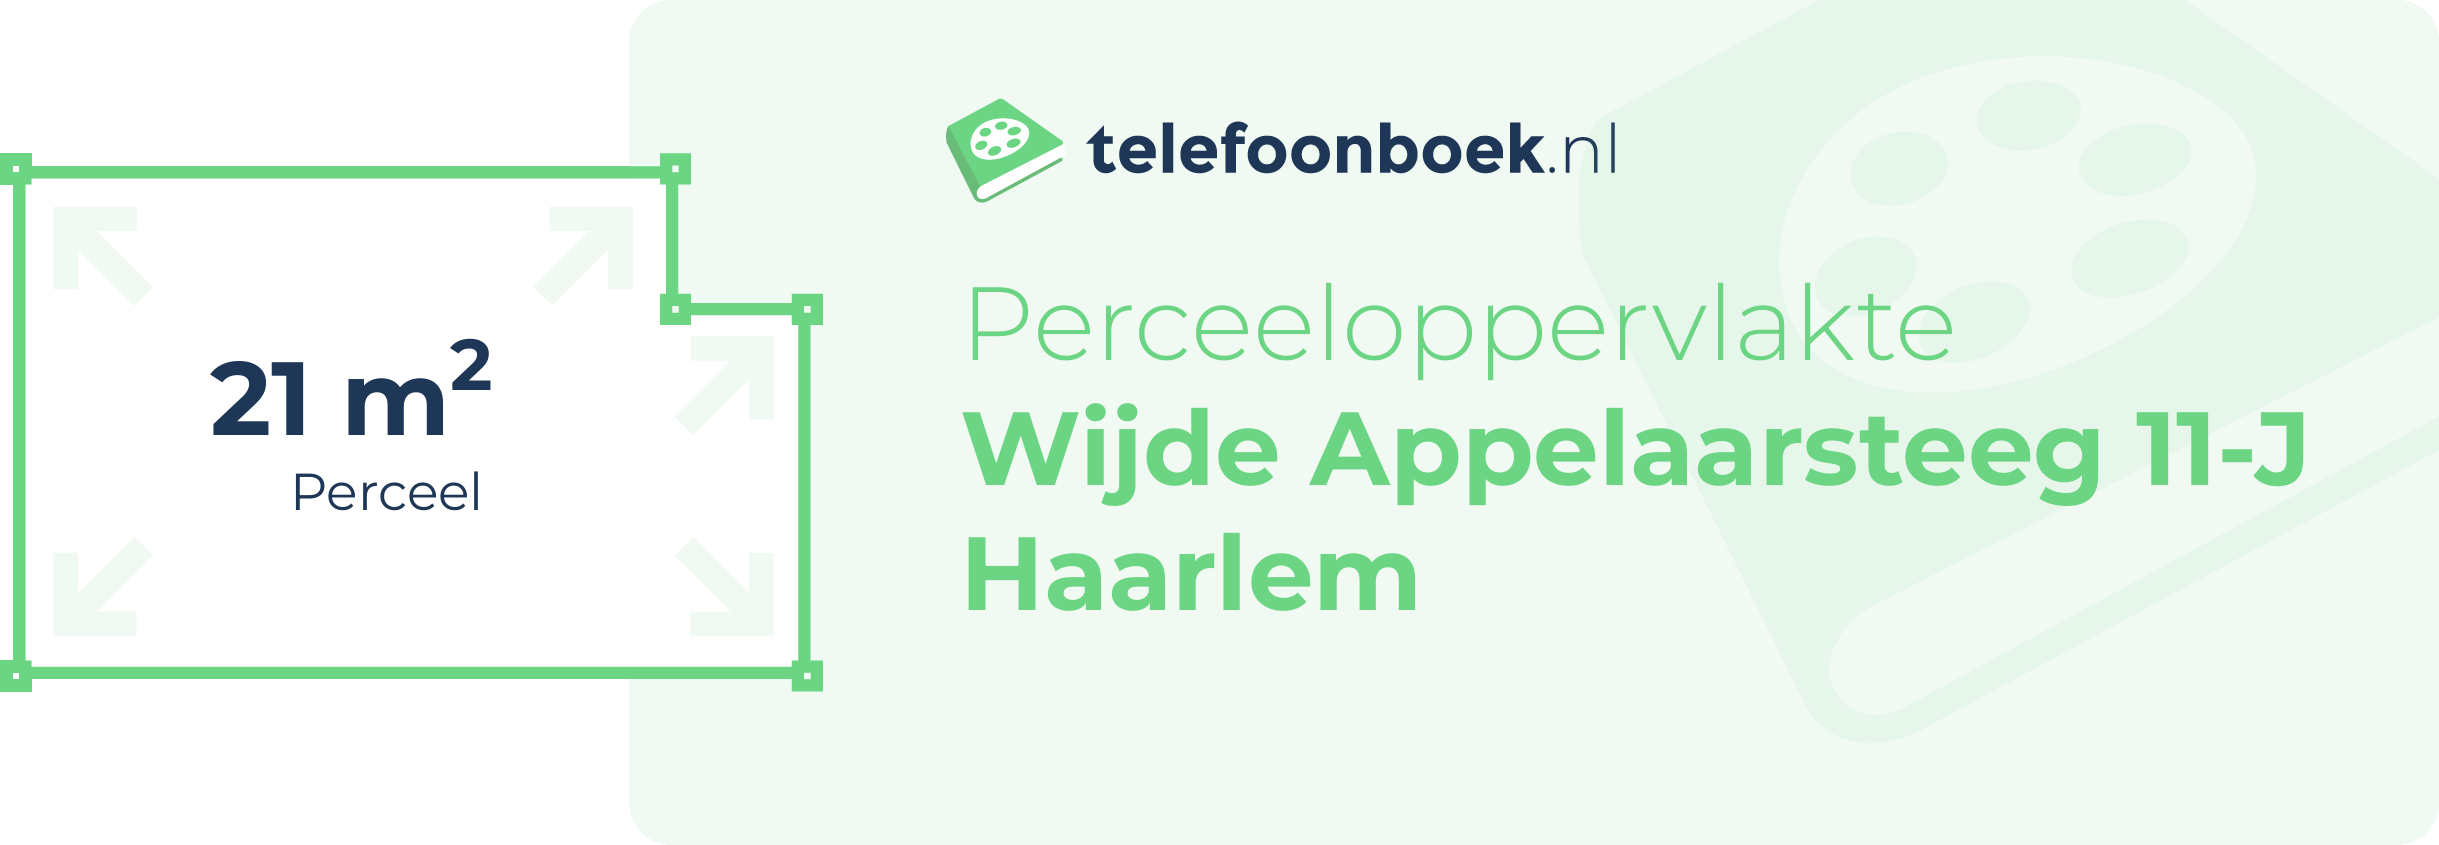 Perceeloppervlakte Wijde Appelaarsteeg 11-J Haarlem